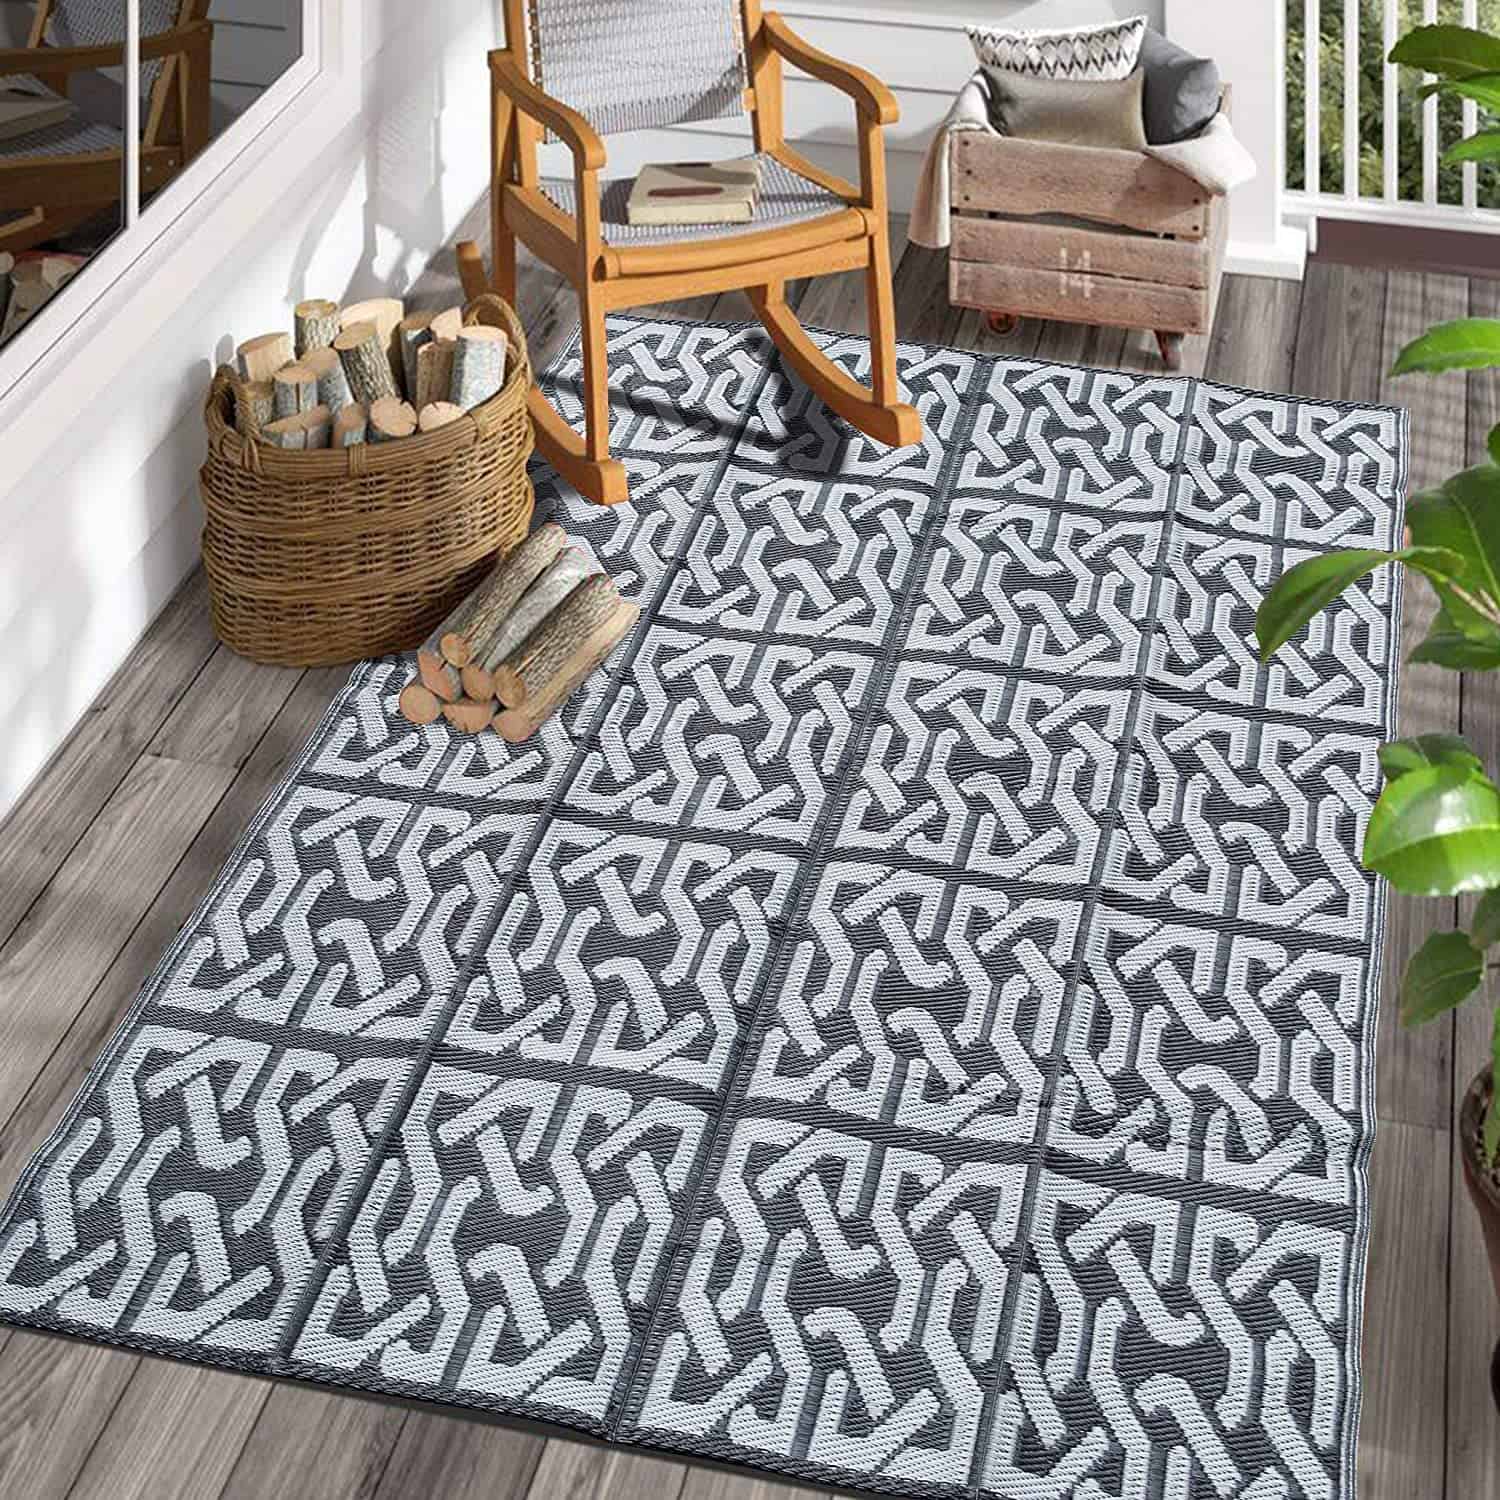 Durable weatherproof rug for outdoor living space.